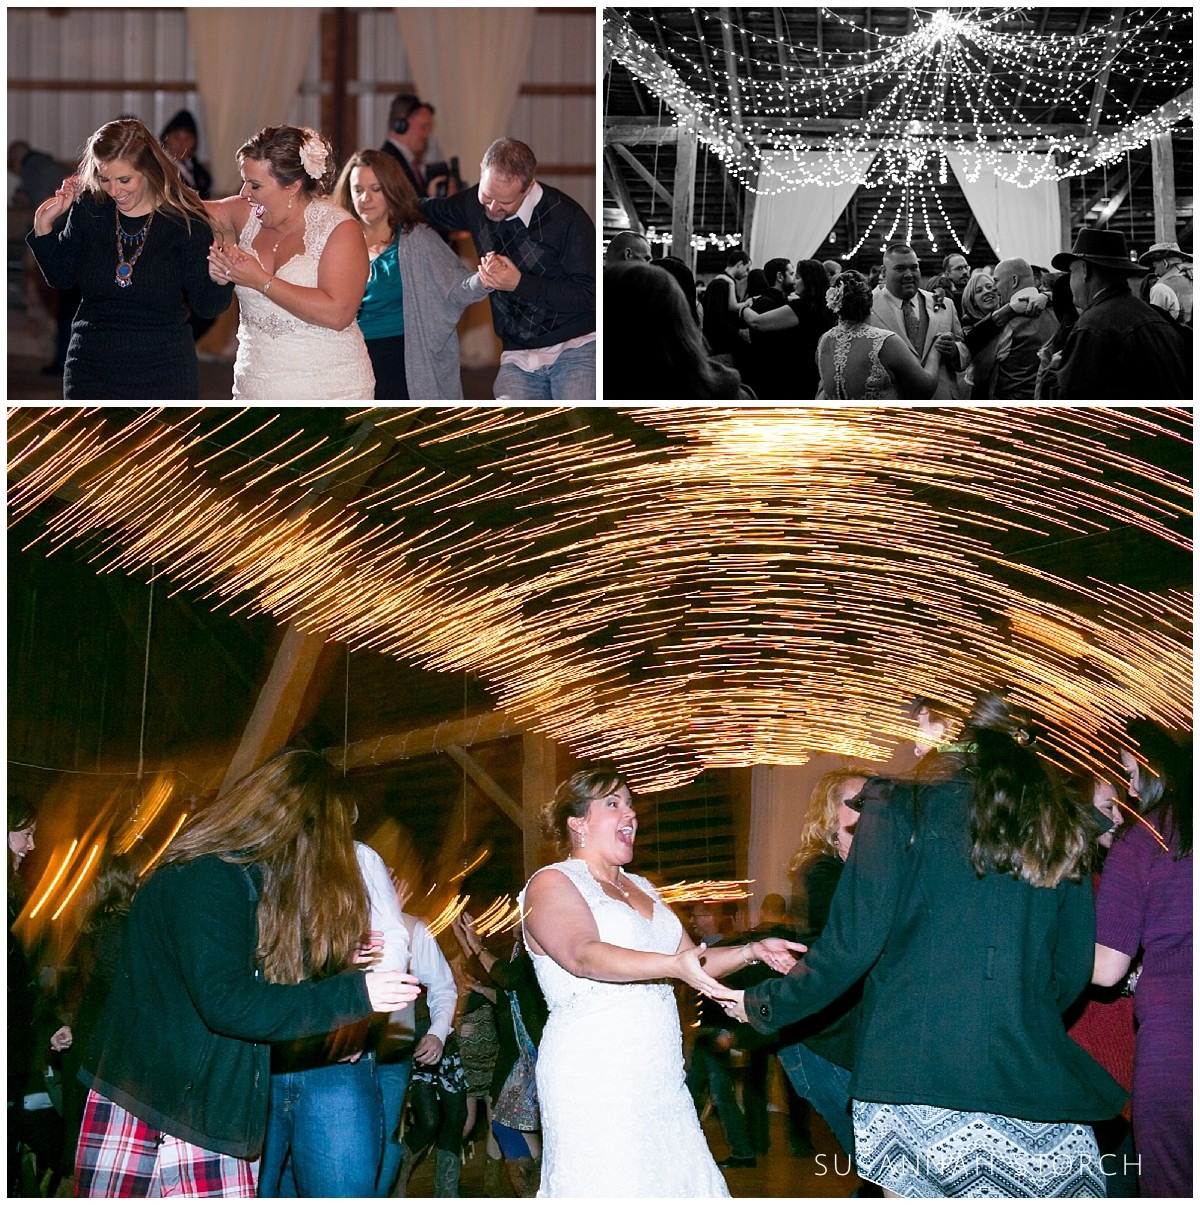 three images of wedding reception dancing